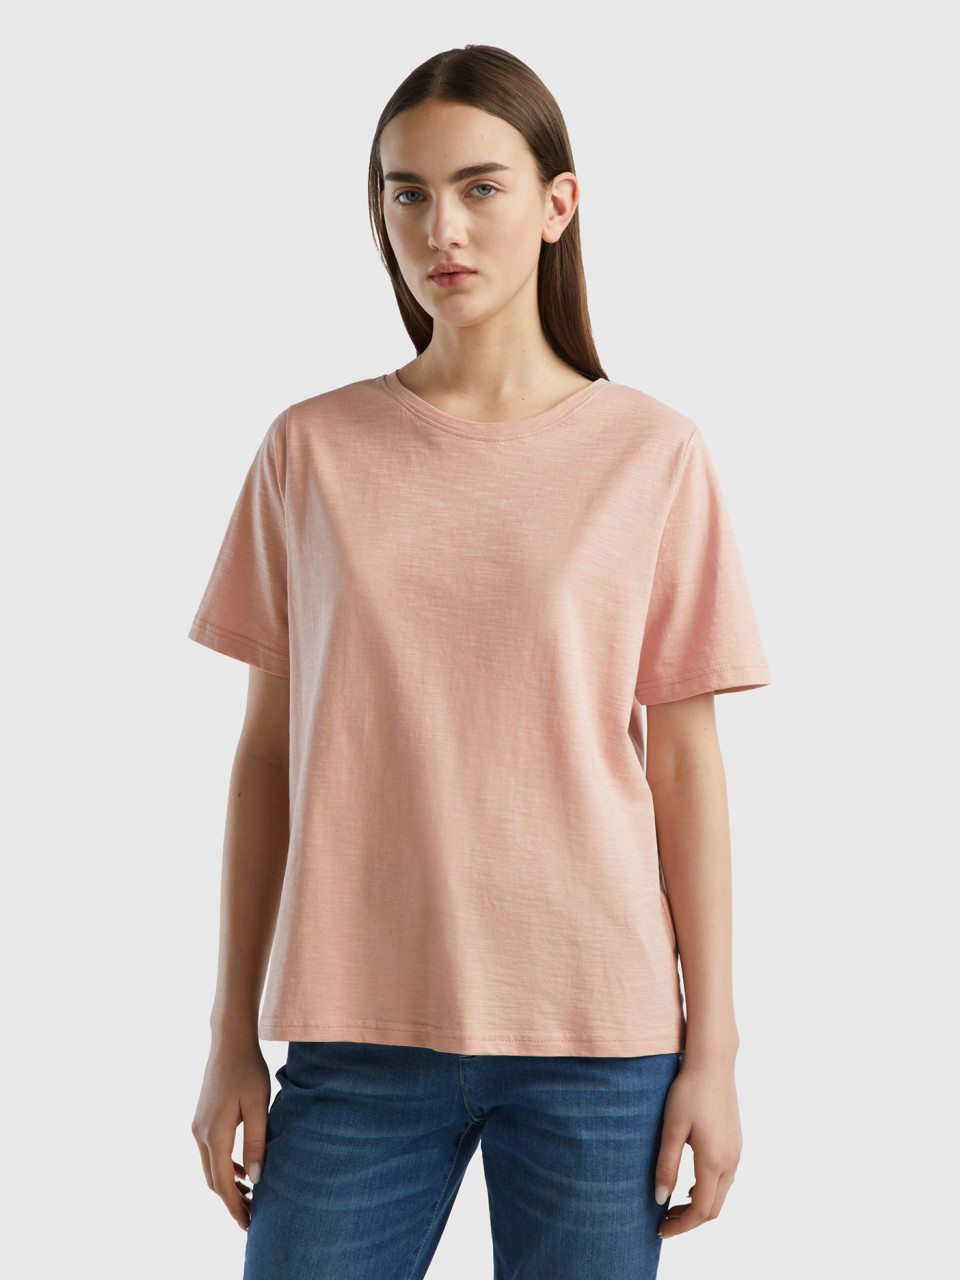 Benetton, Crew Neck T-shirt In Slub Cotton, Soft Pink, Women